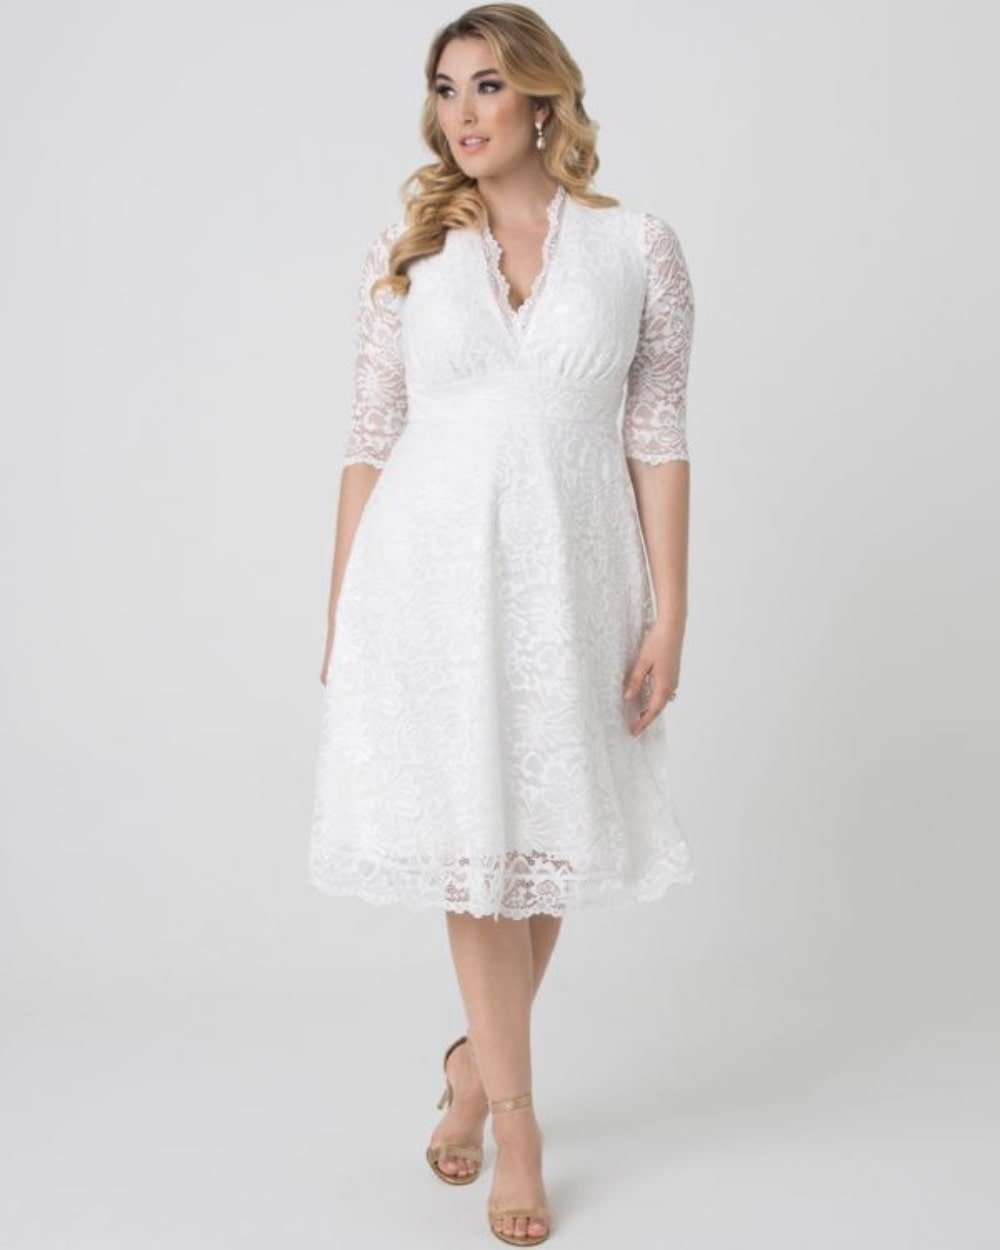 Plus size budget friendly eloping dress : r/Weddingattireapproval